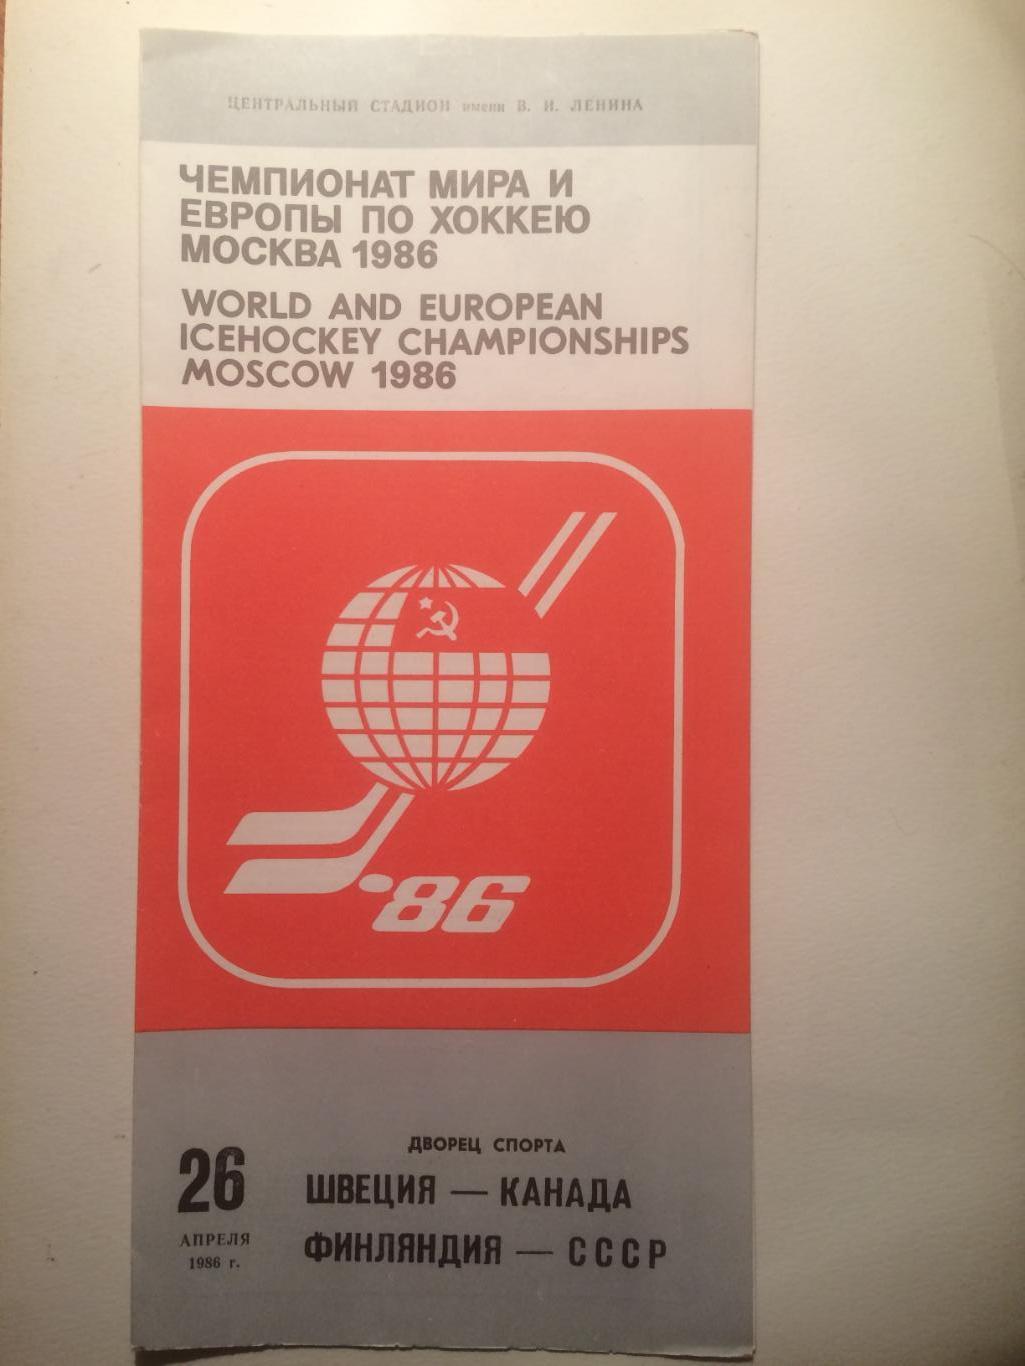 Чемпионат мира-1986 Швеция-Канада,Финляндия - СССР 26.04.1986